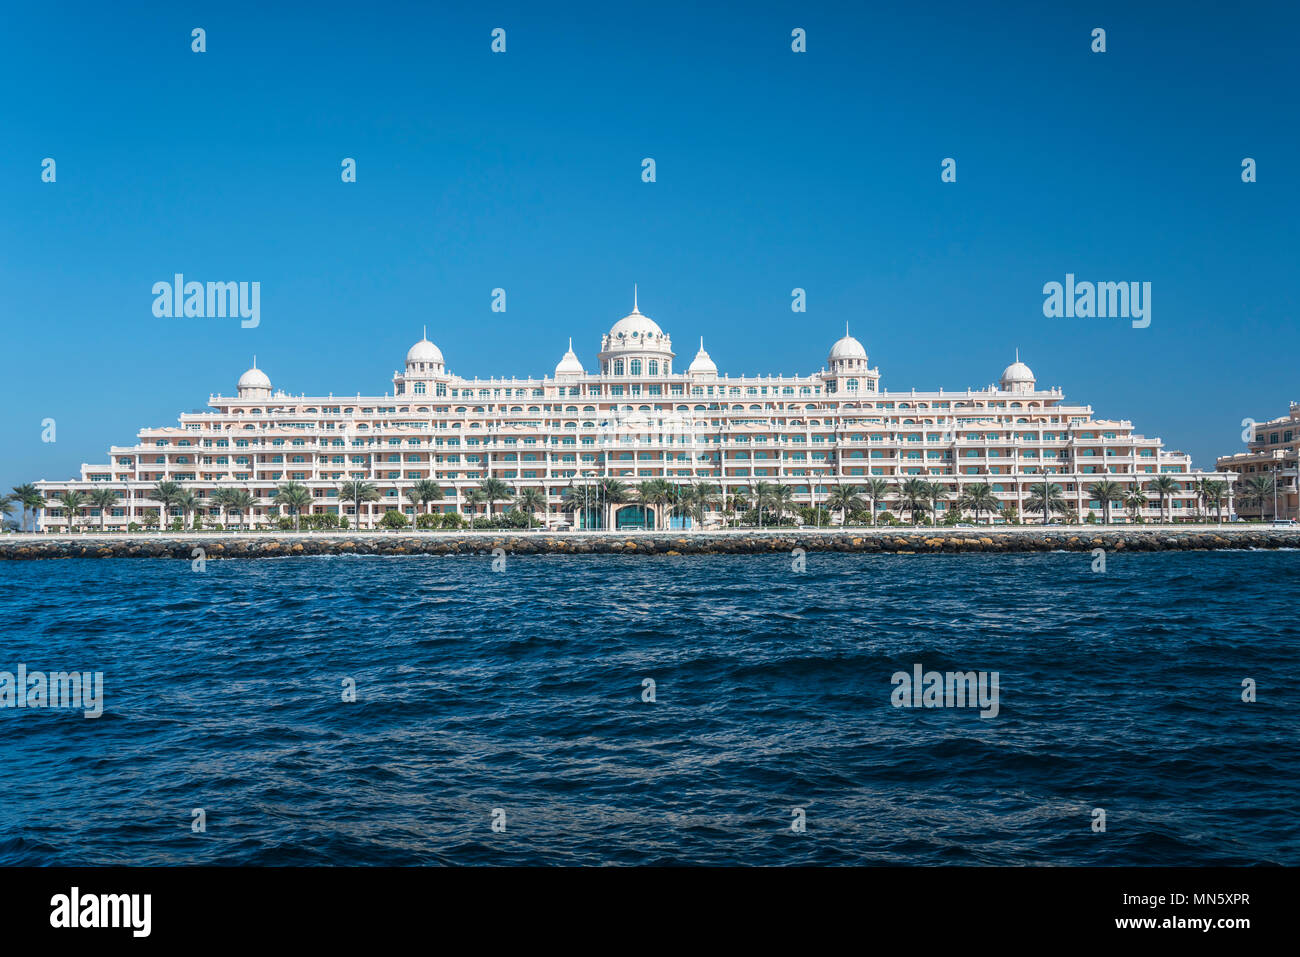 The Kempinski Hotel and Residences on the Palm Jumeirah islands off the coast of Dubai, UAE, Middle East. Stock Photo